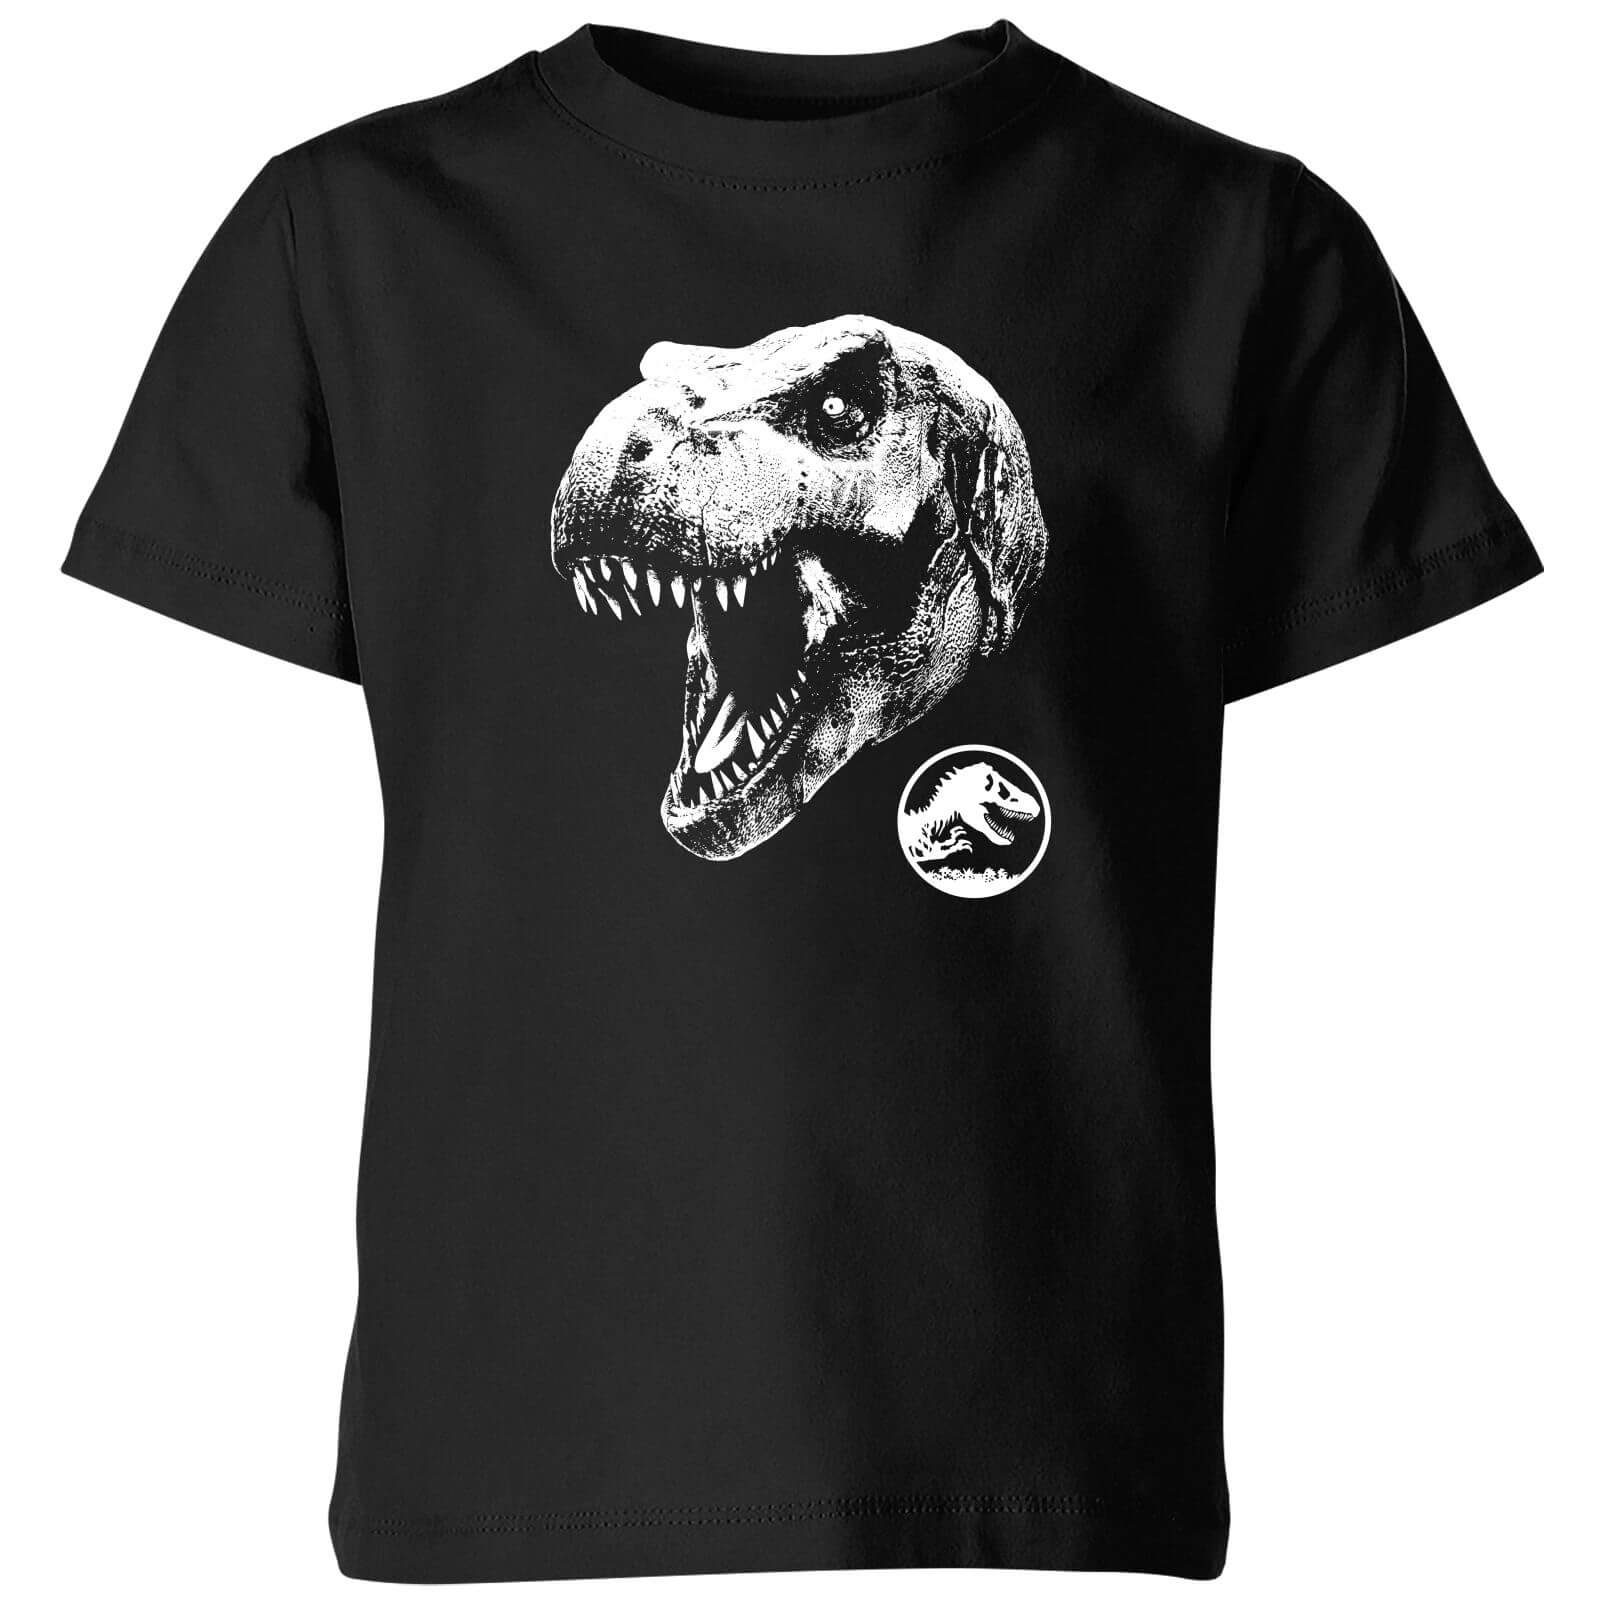 Jurassic Park T Rex Kids' T-Shirt - Black - 3-4 Years - Black